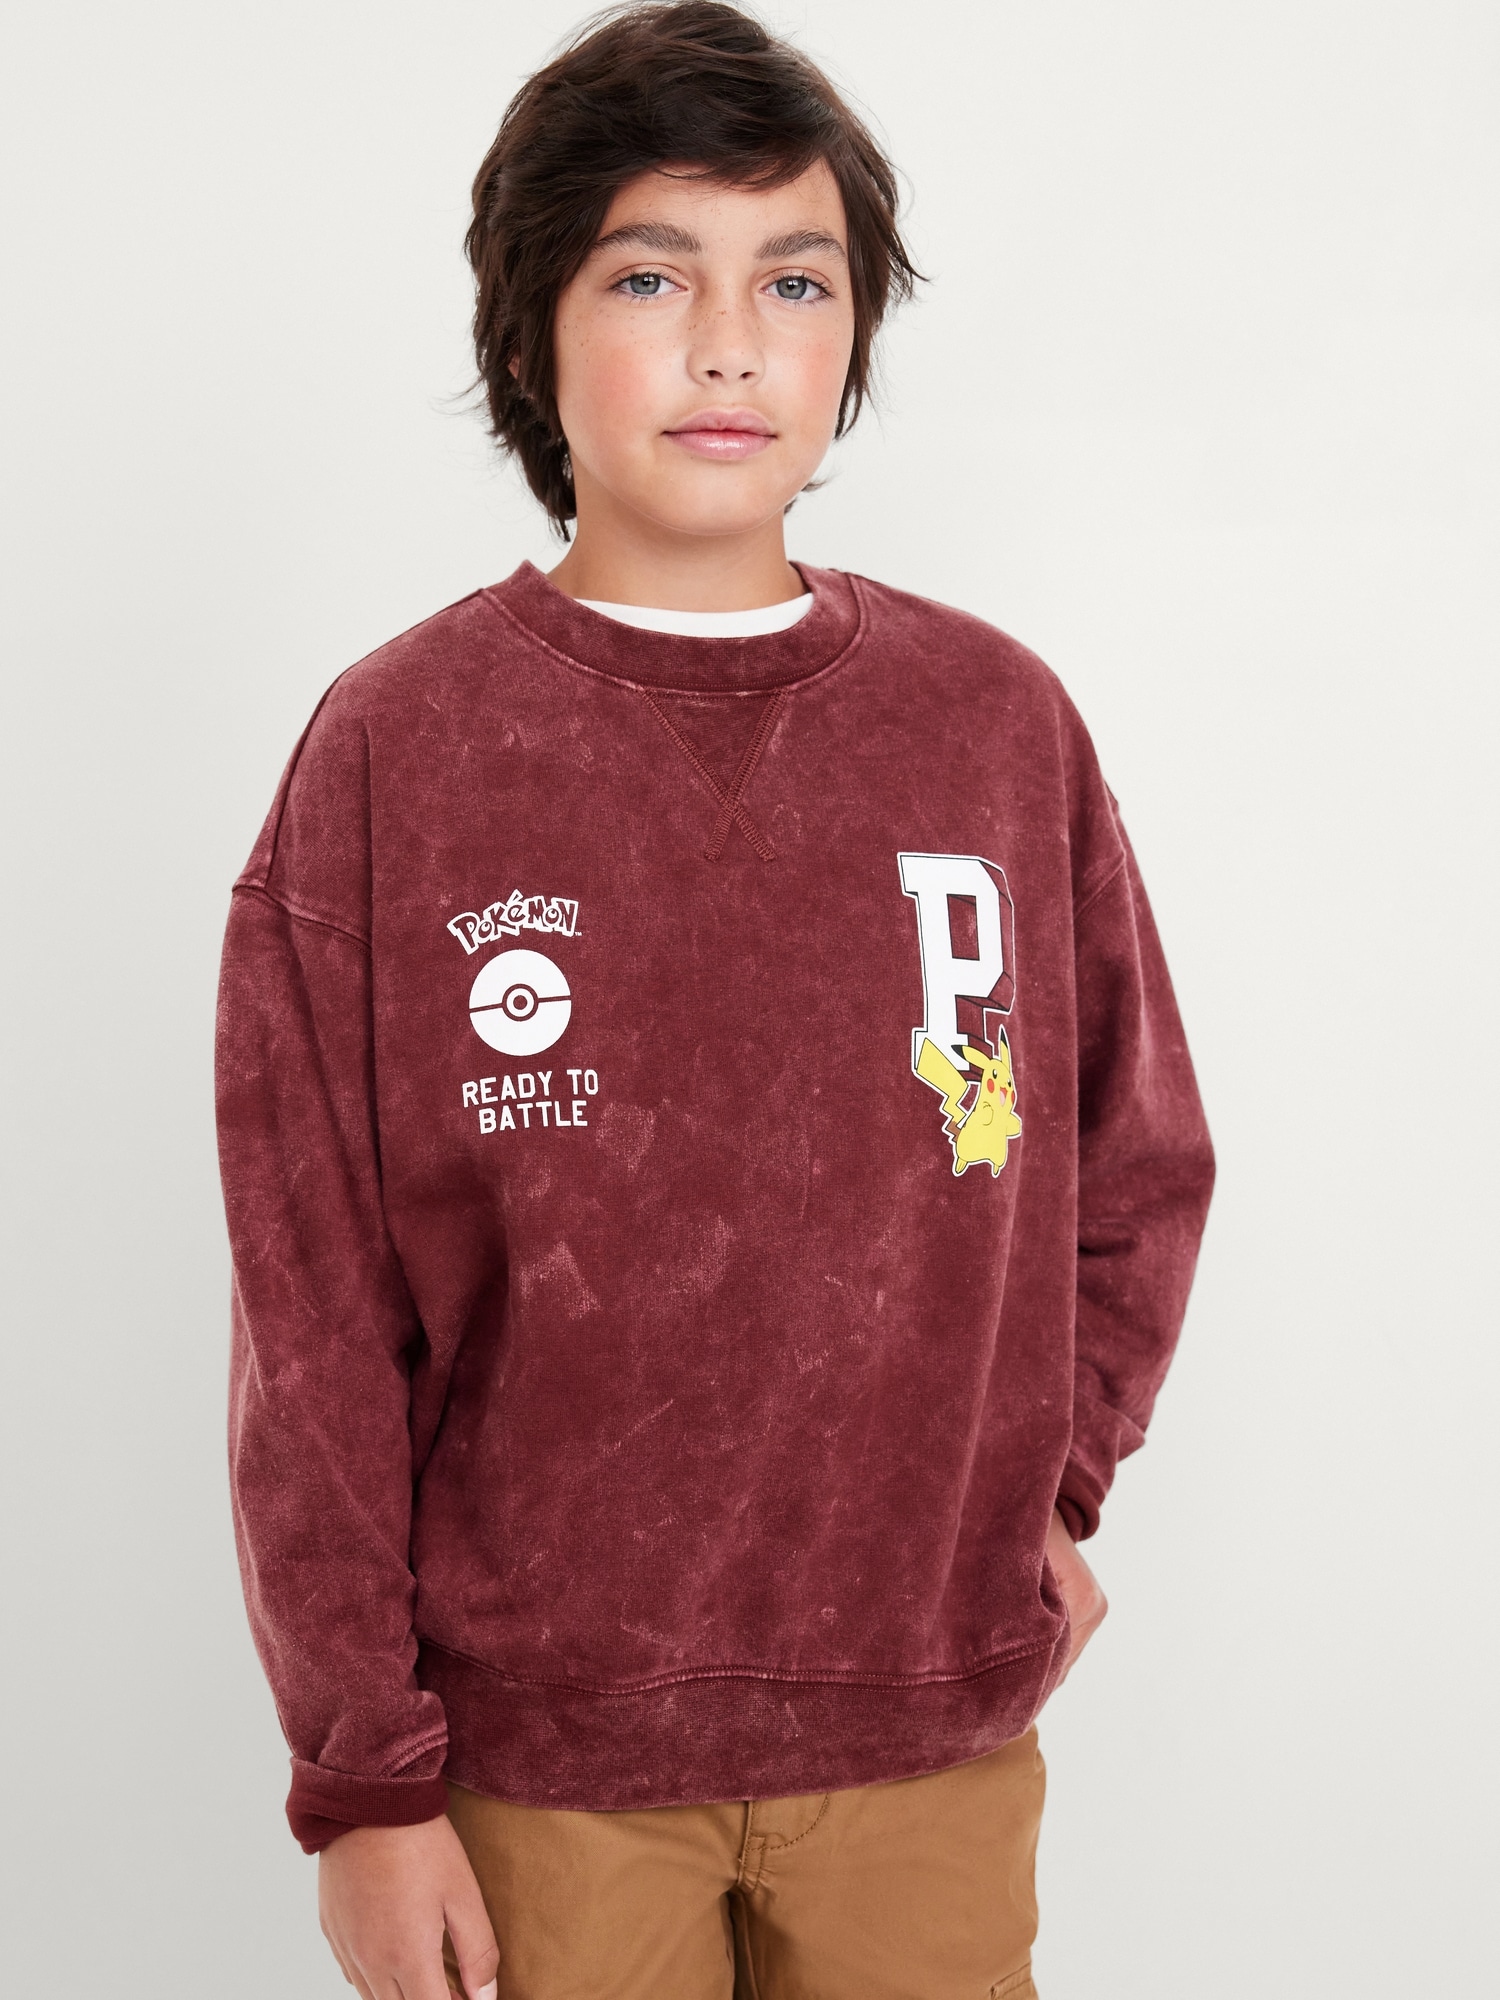 Over-Sized Gender-Neutral Sweatshirt for Kids